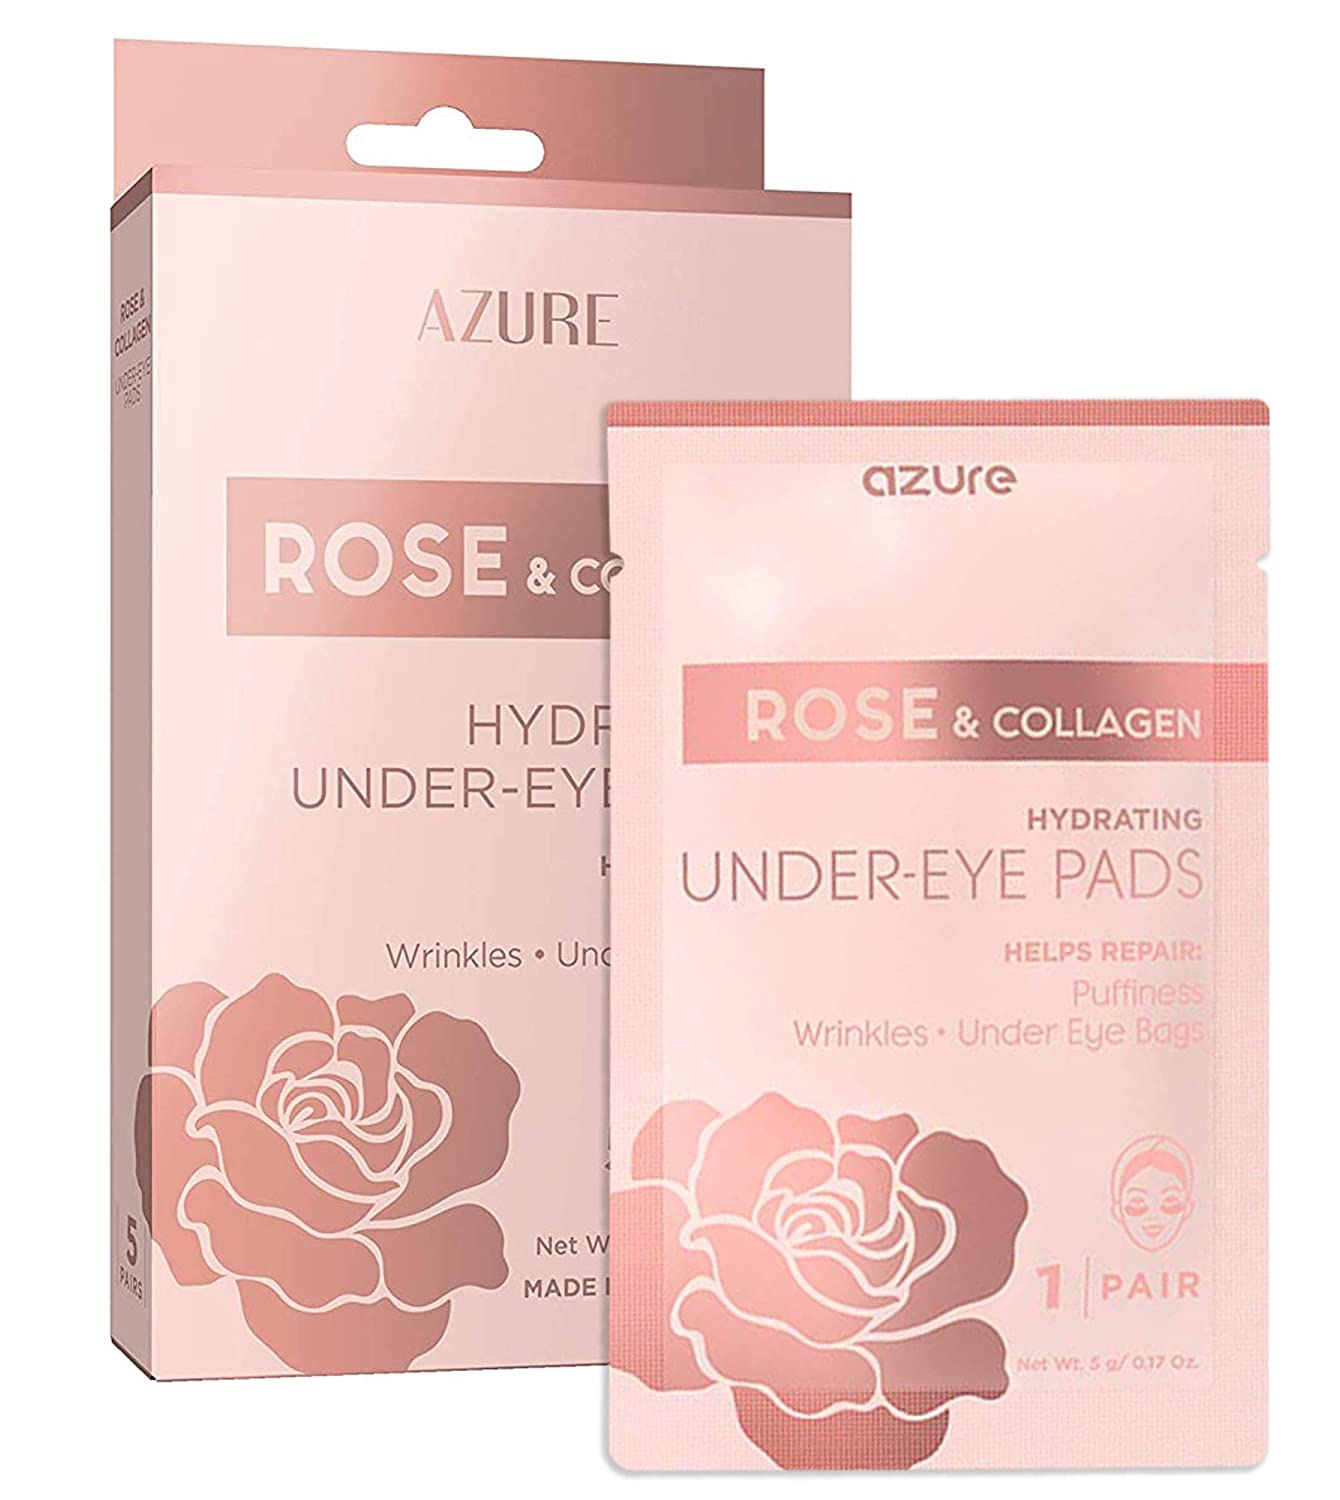 Azure Rose & Collagen Hydrating Under-Eye Pads